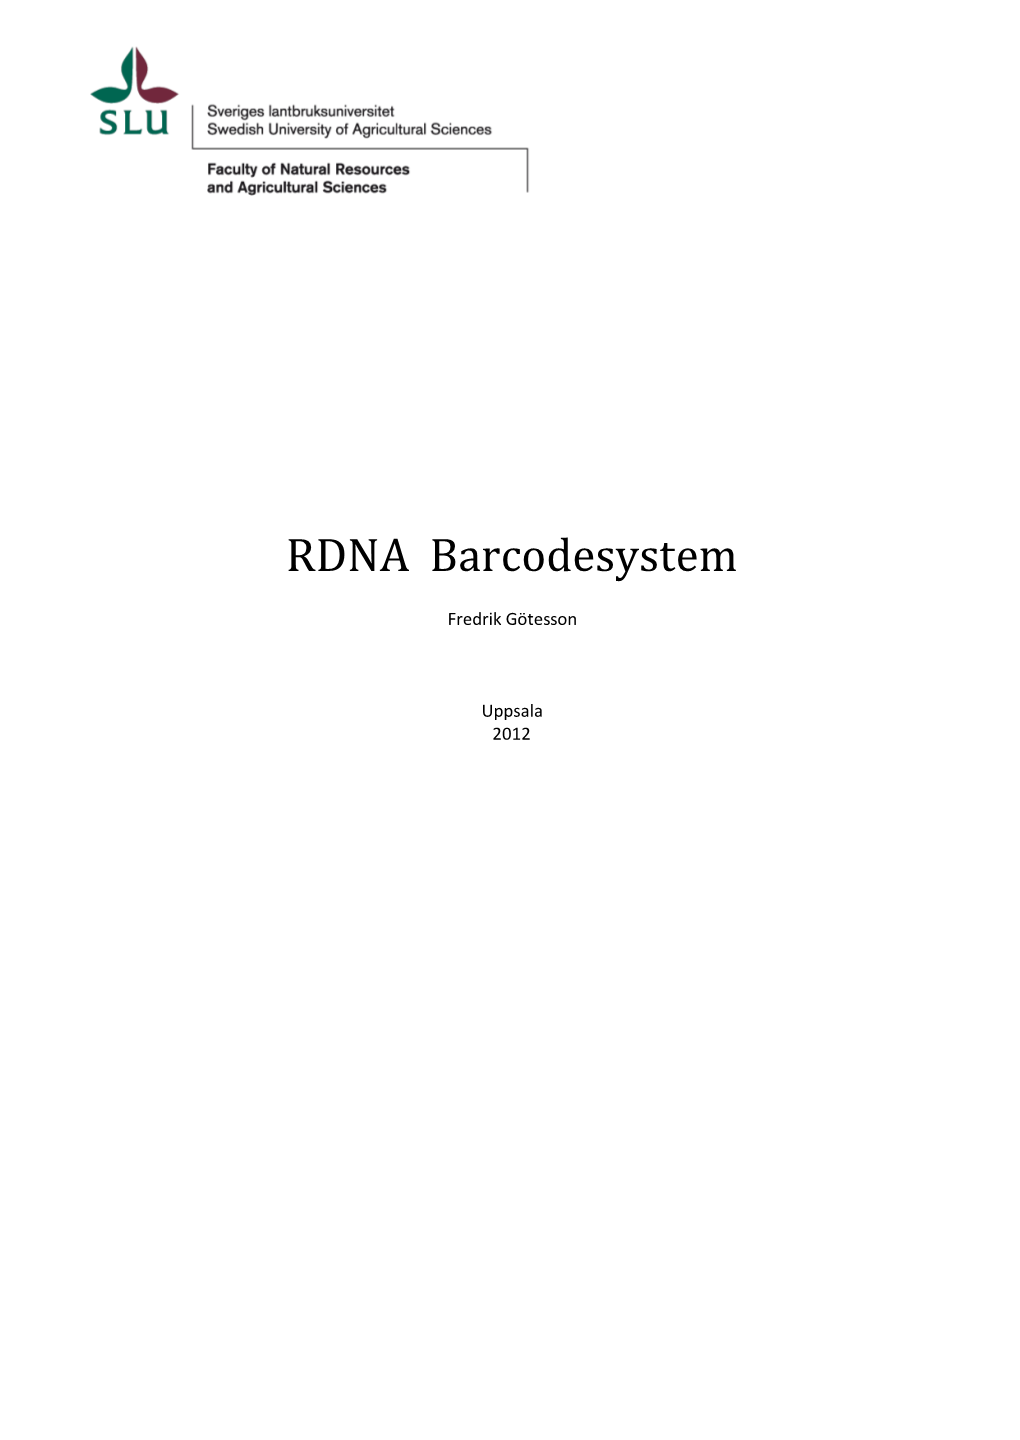 RDNA Barcodesystem